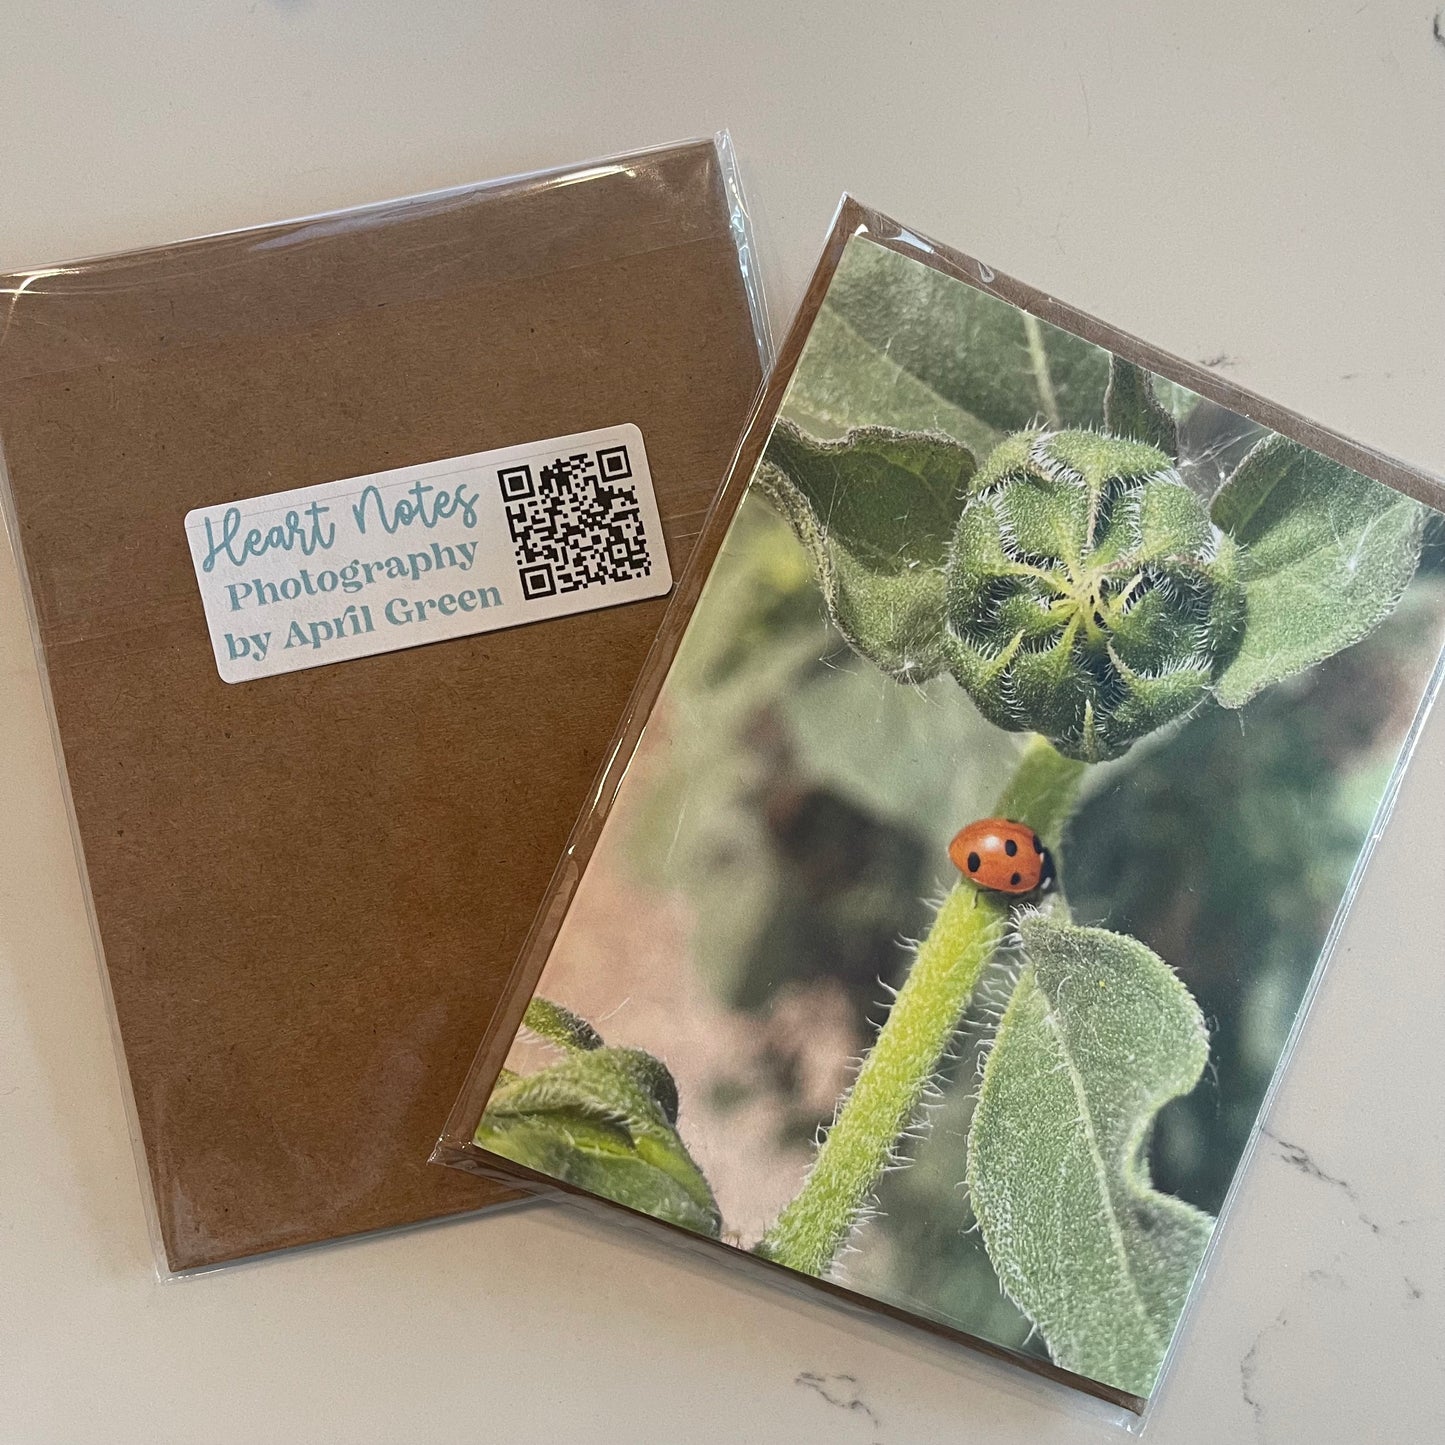 Ladybug On Stem Greeting Card With Kraft Envelope